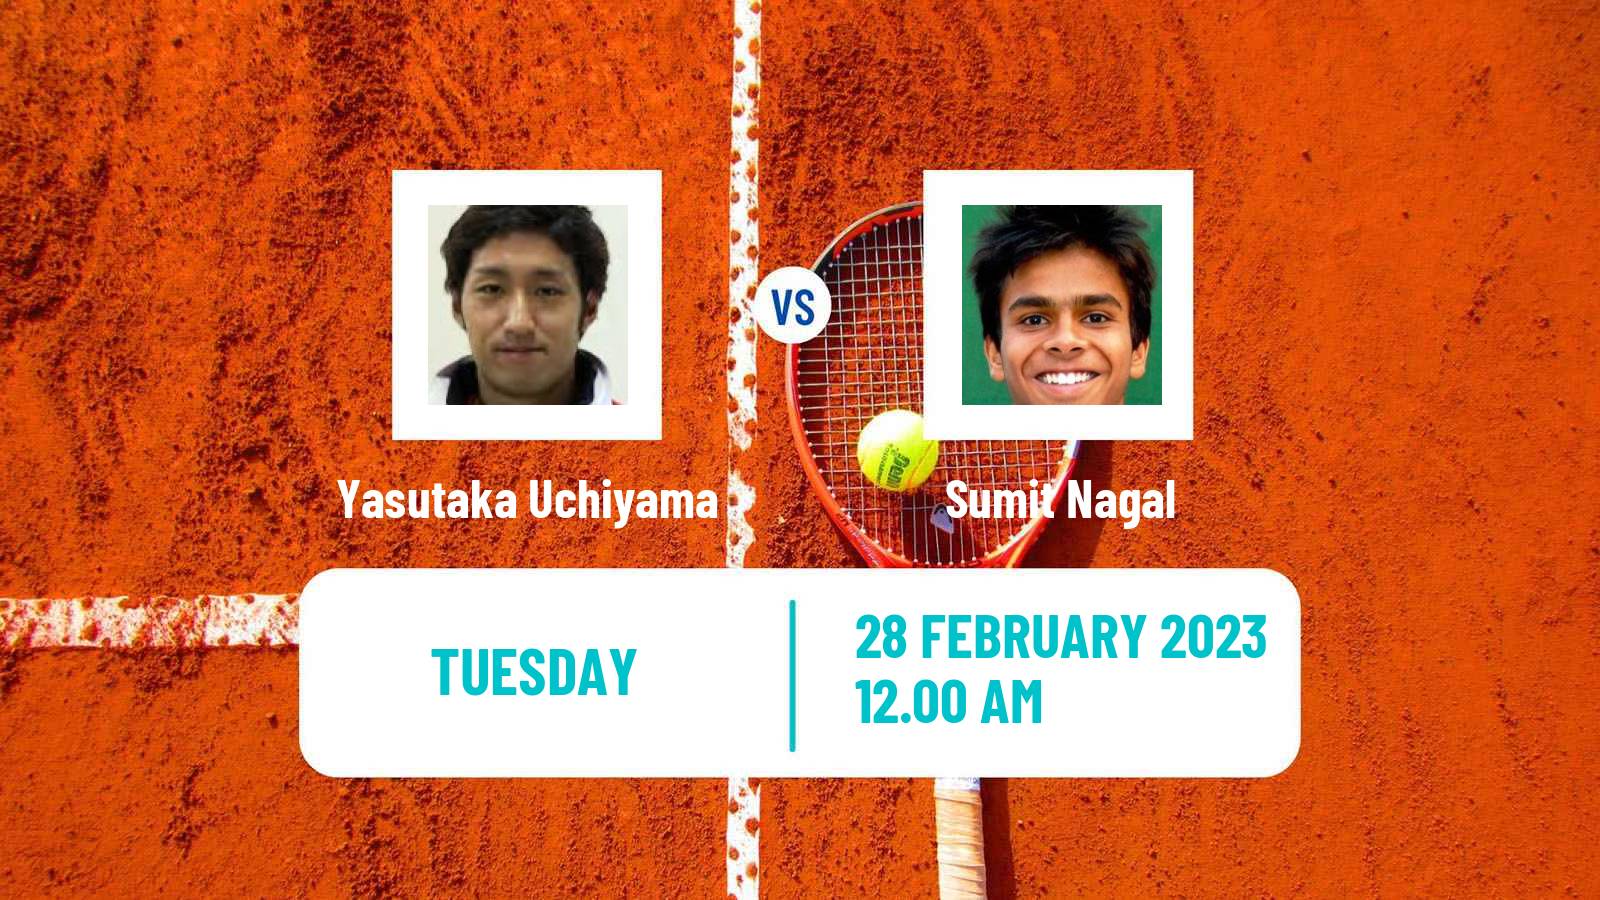 Tennis ATP Challenger Yasutaka Uchiyama - Sumit Nagal